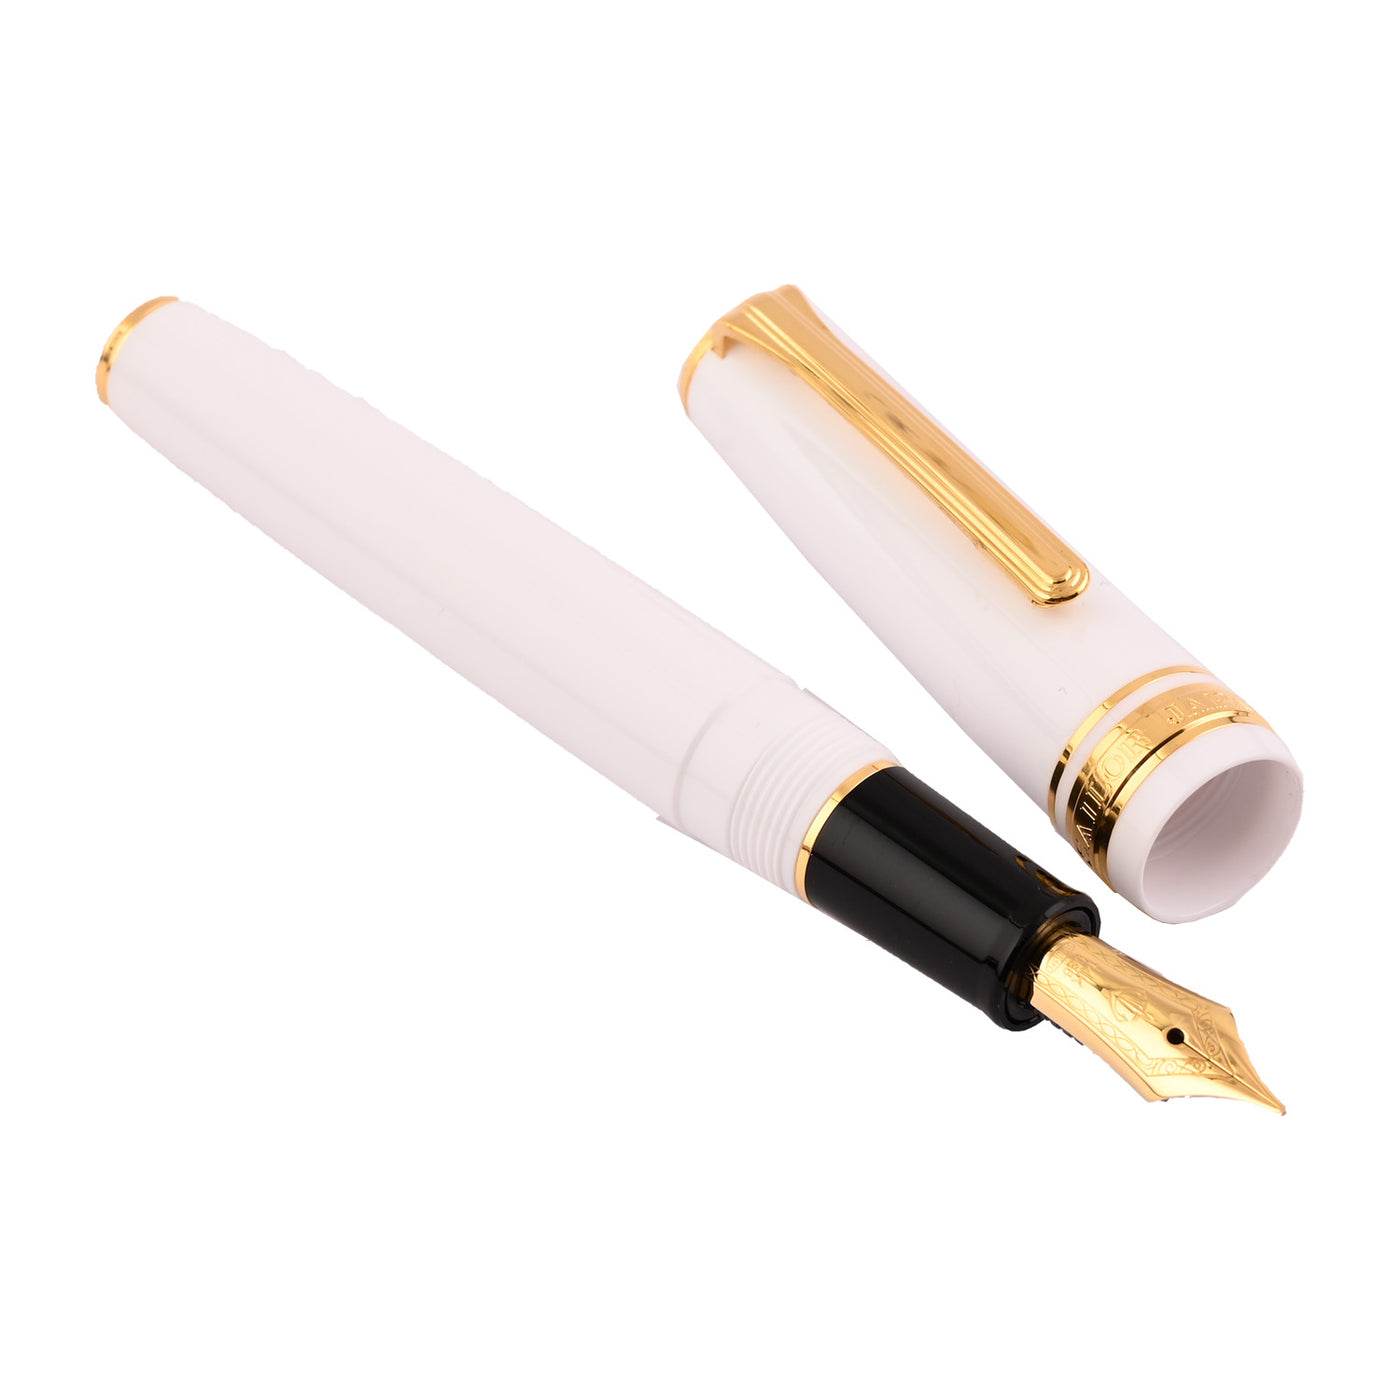 Sailor Professional Gear Slim Fountain Pen - White GT 2